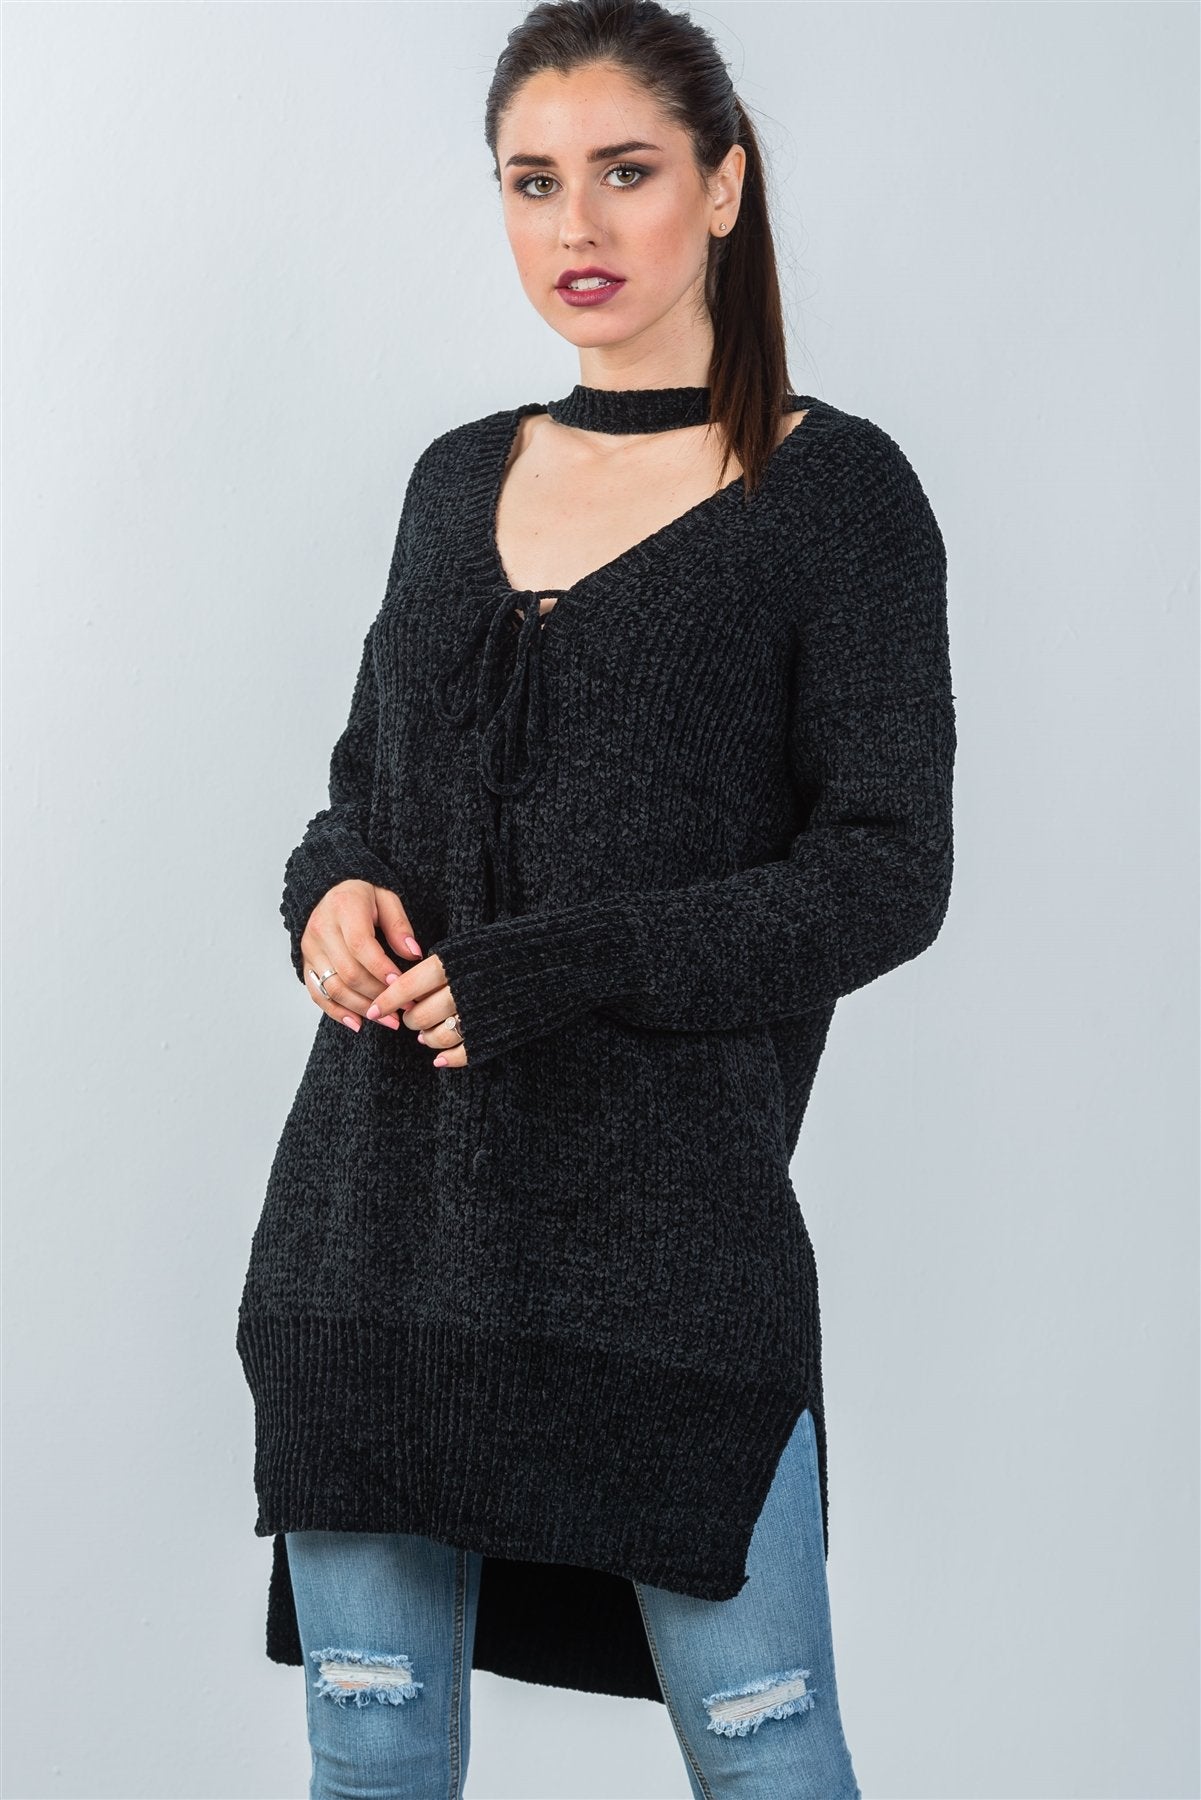 Ladies fashion black keyhole choker sweater dress